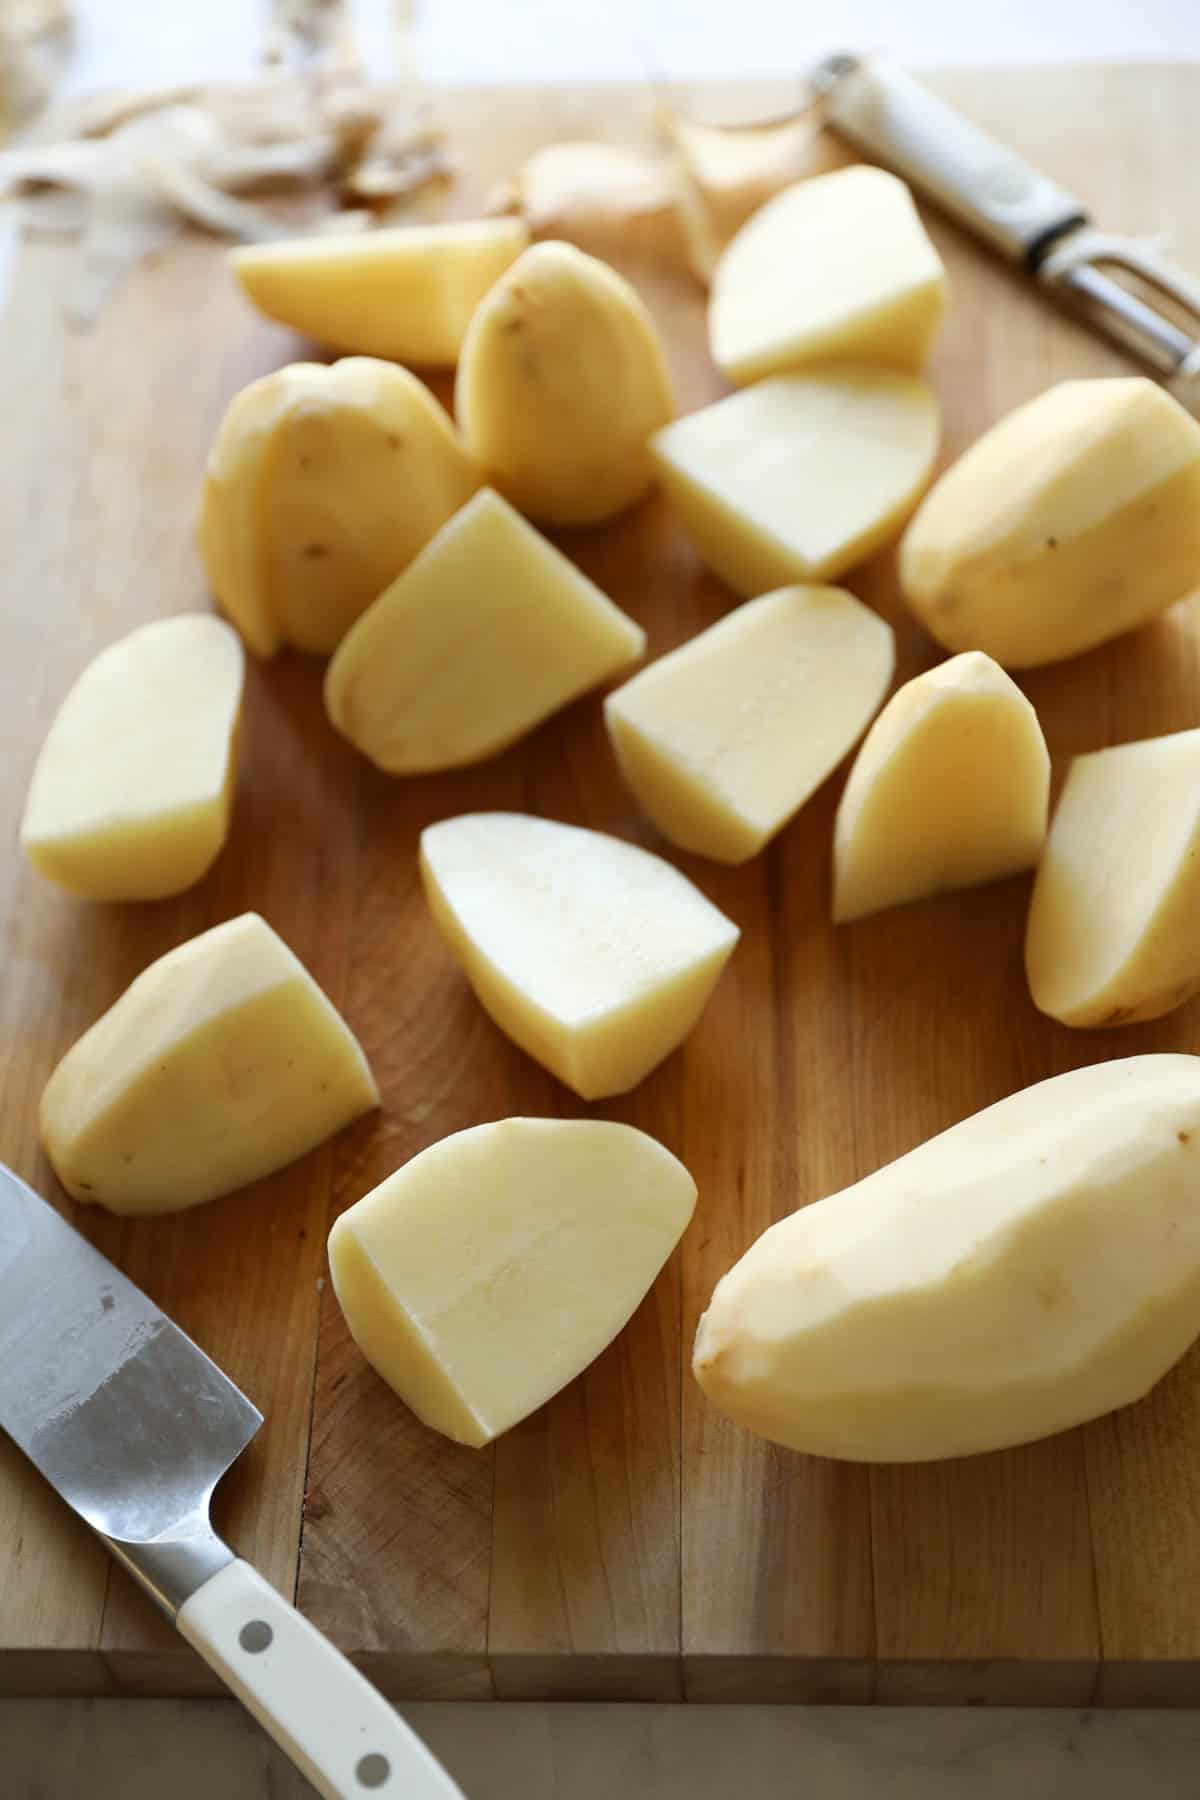 Peeled and cut potatoes on a board